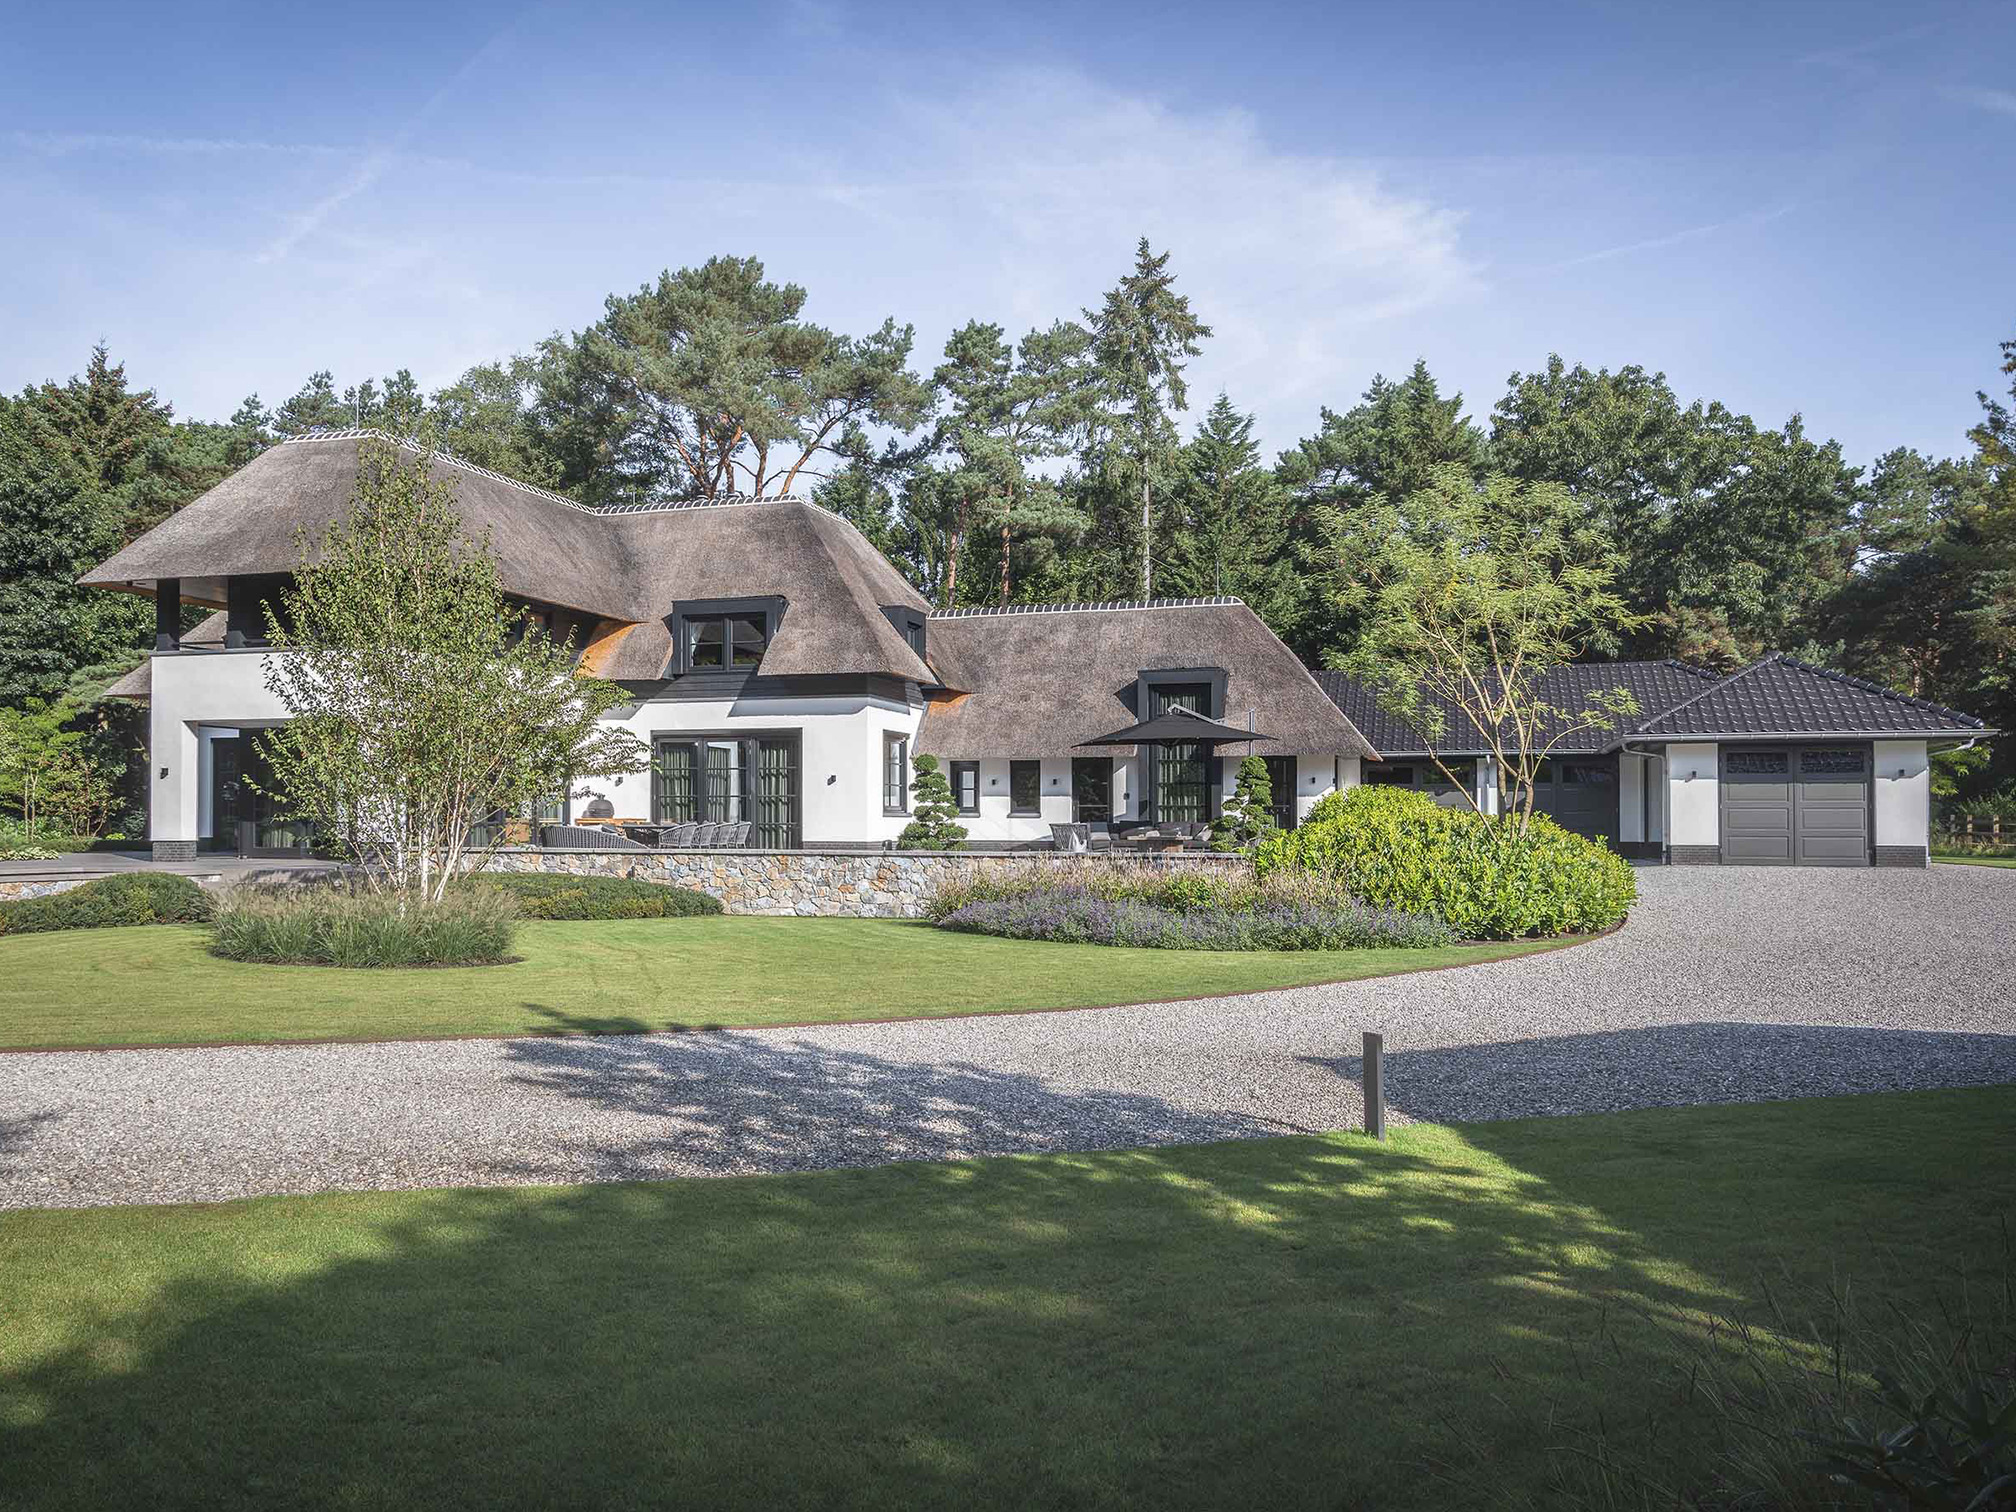 bosrijke villatuin | midden nederland